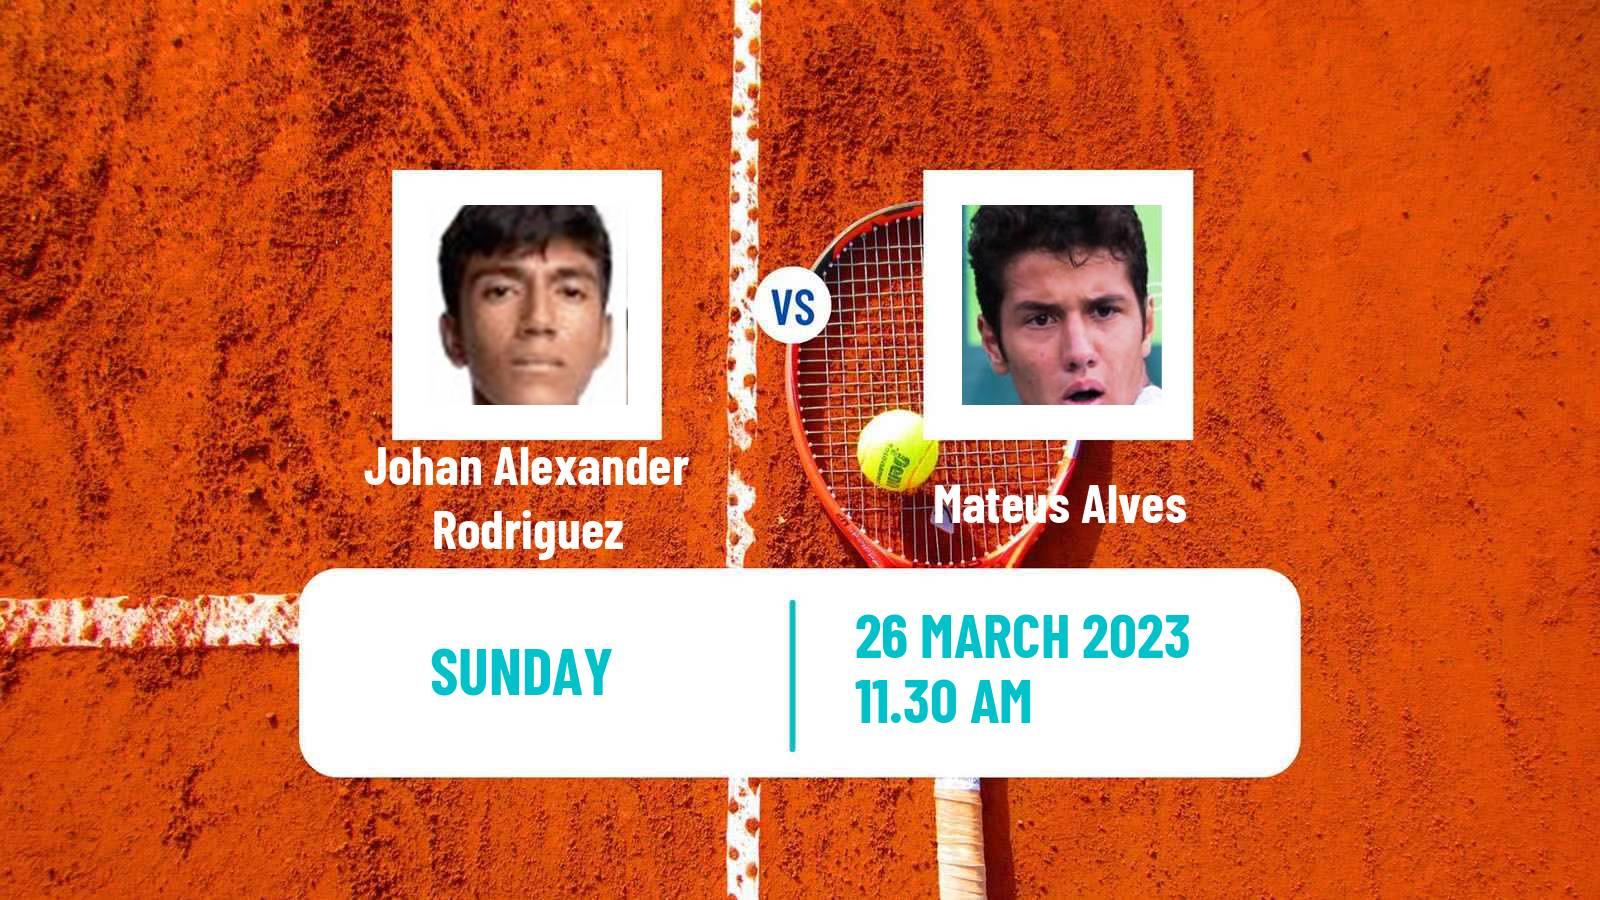 Tennis ITF Tournaments Johan Alexander Rodriguez - Mateus Alves